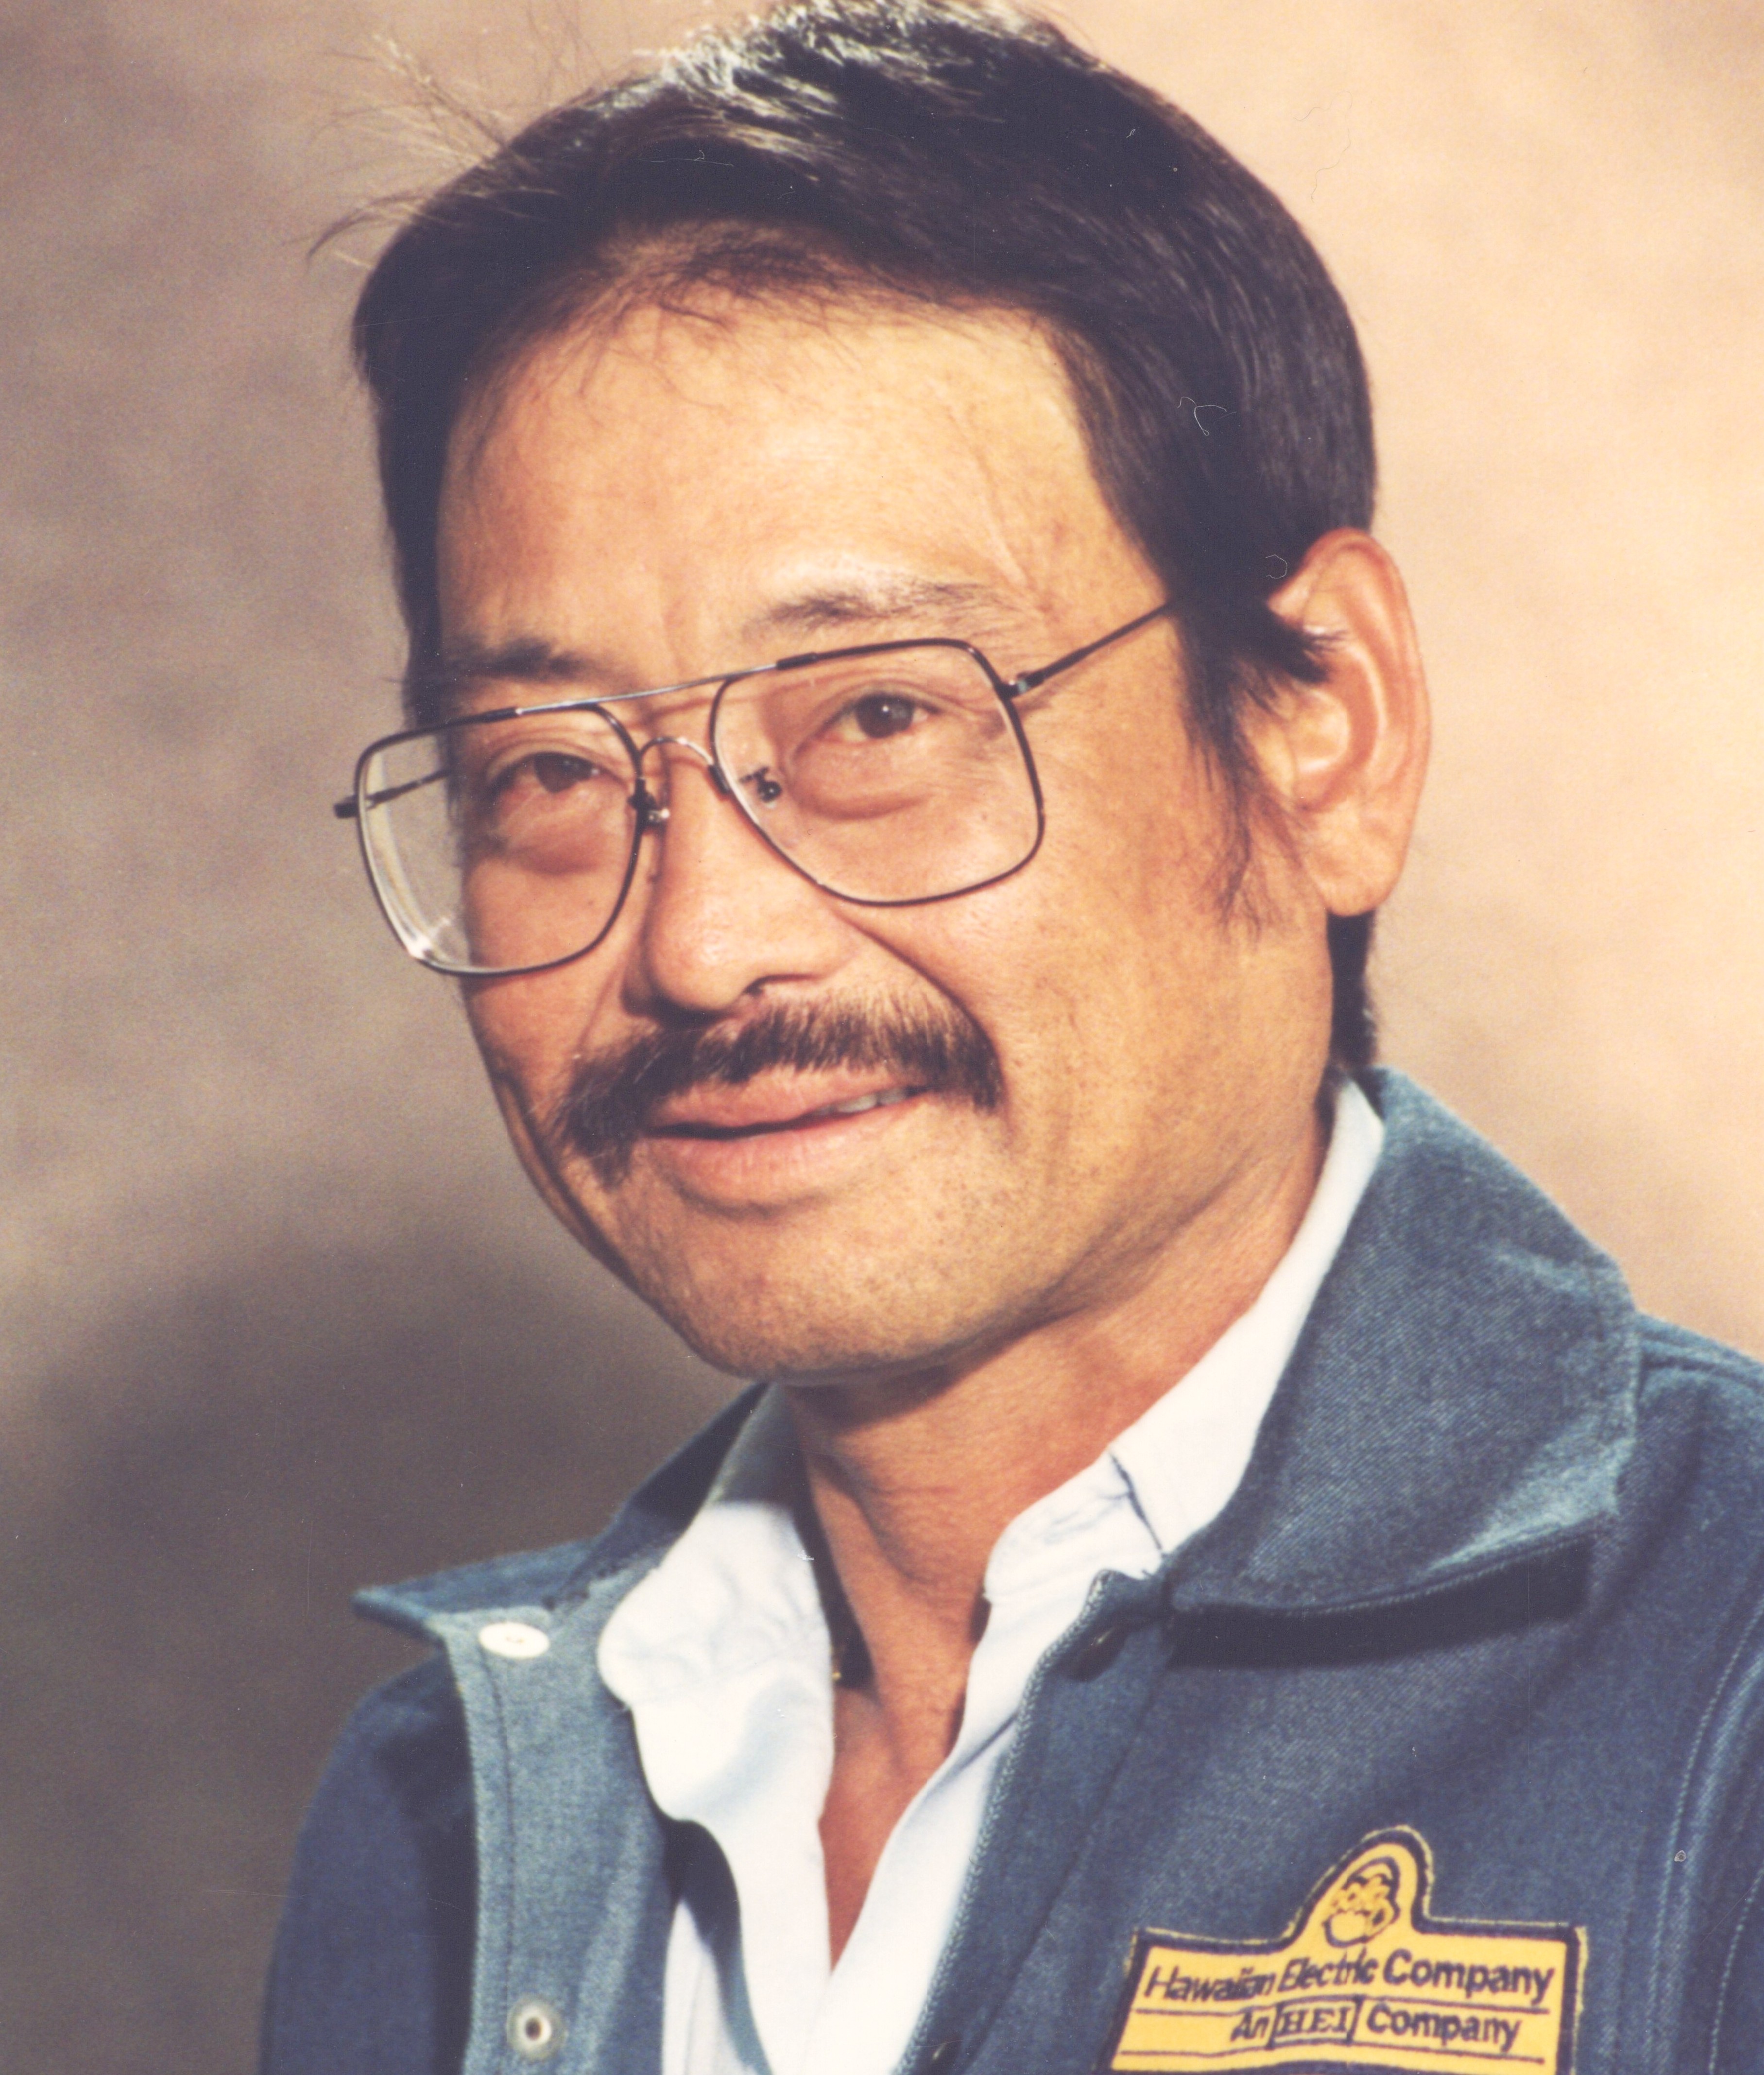 Chad Yasuo Oshiro